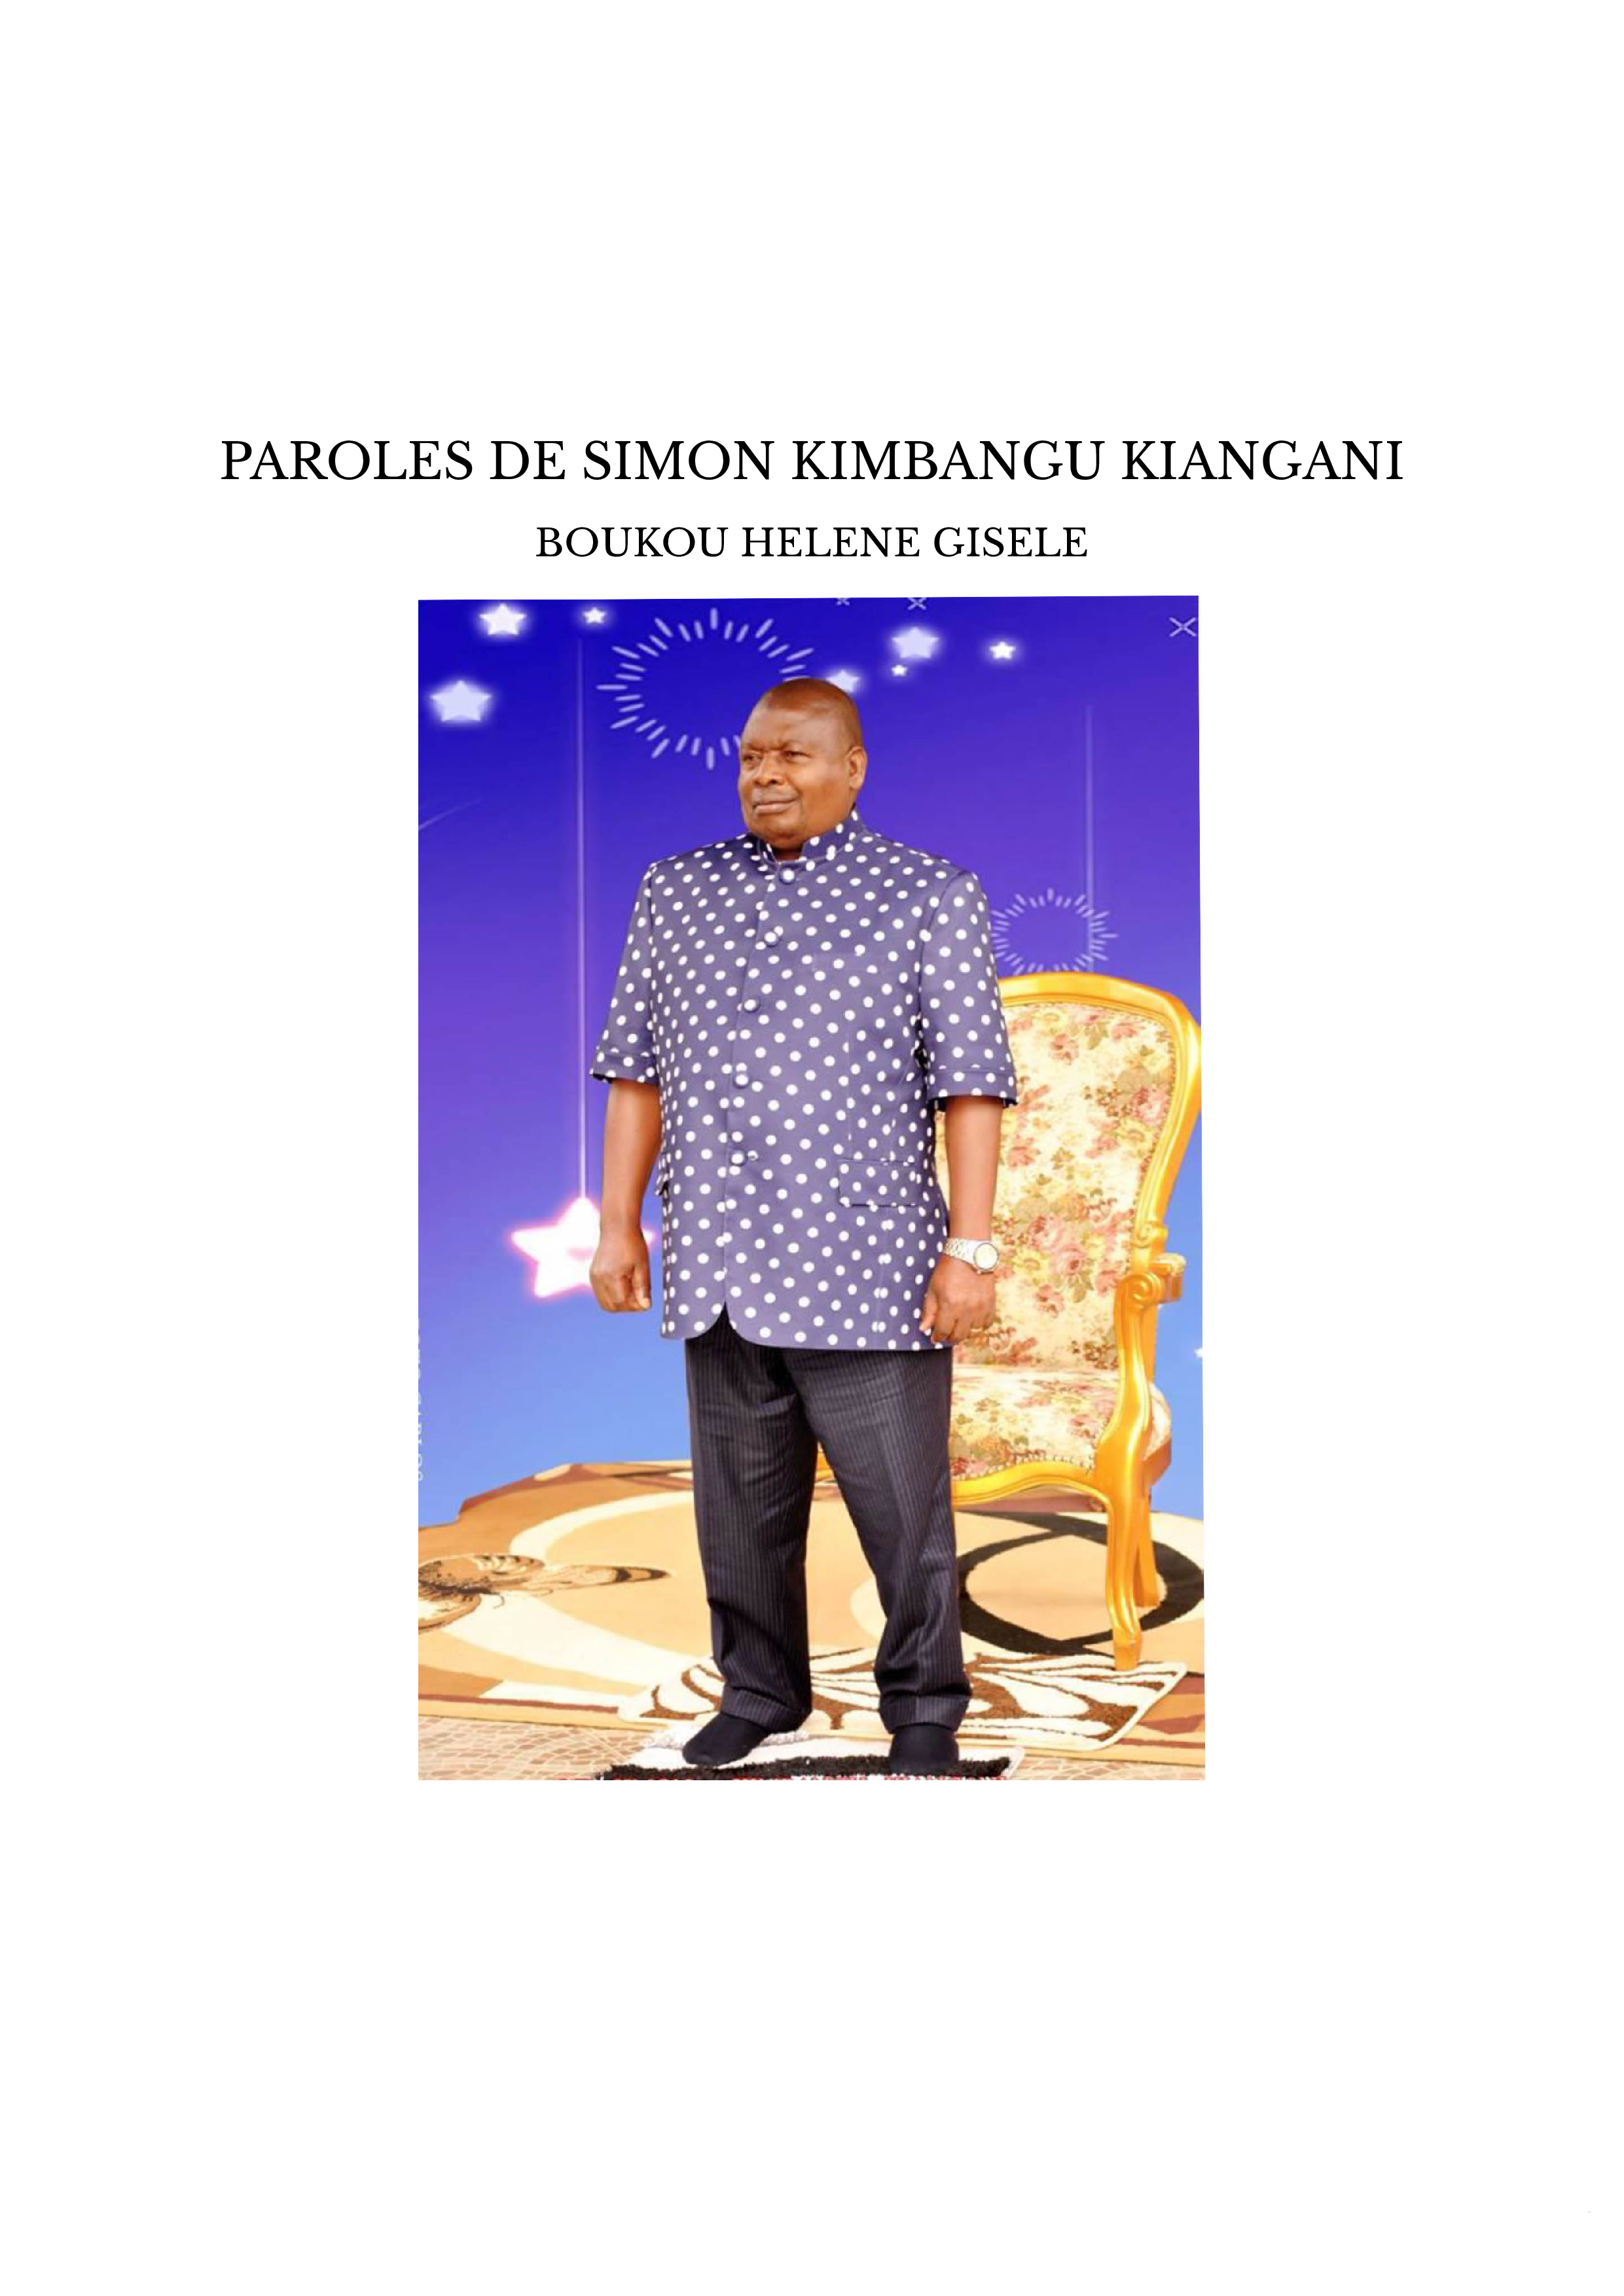 PAROLES DE SIMON KIMBANGU KIANGANI